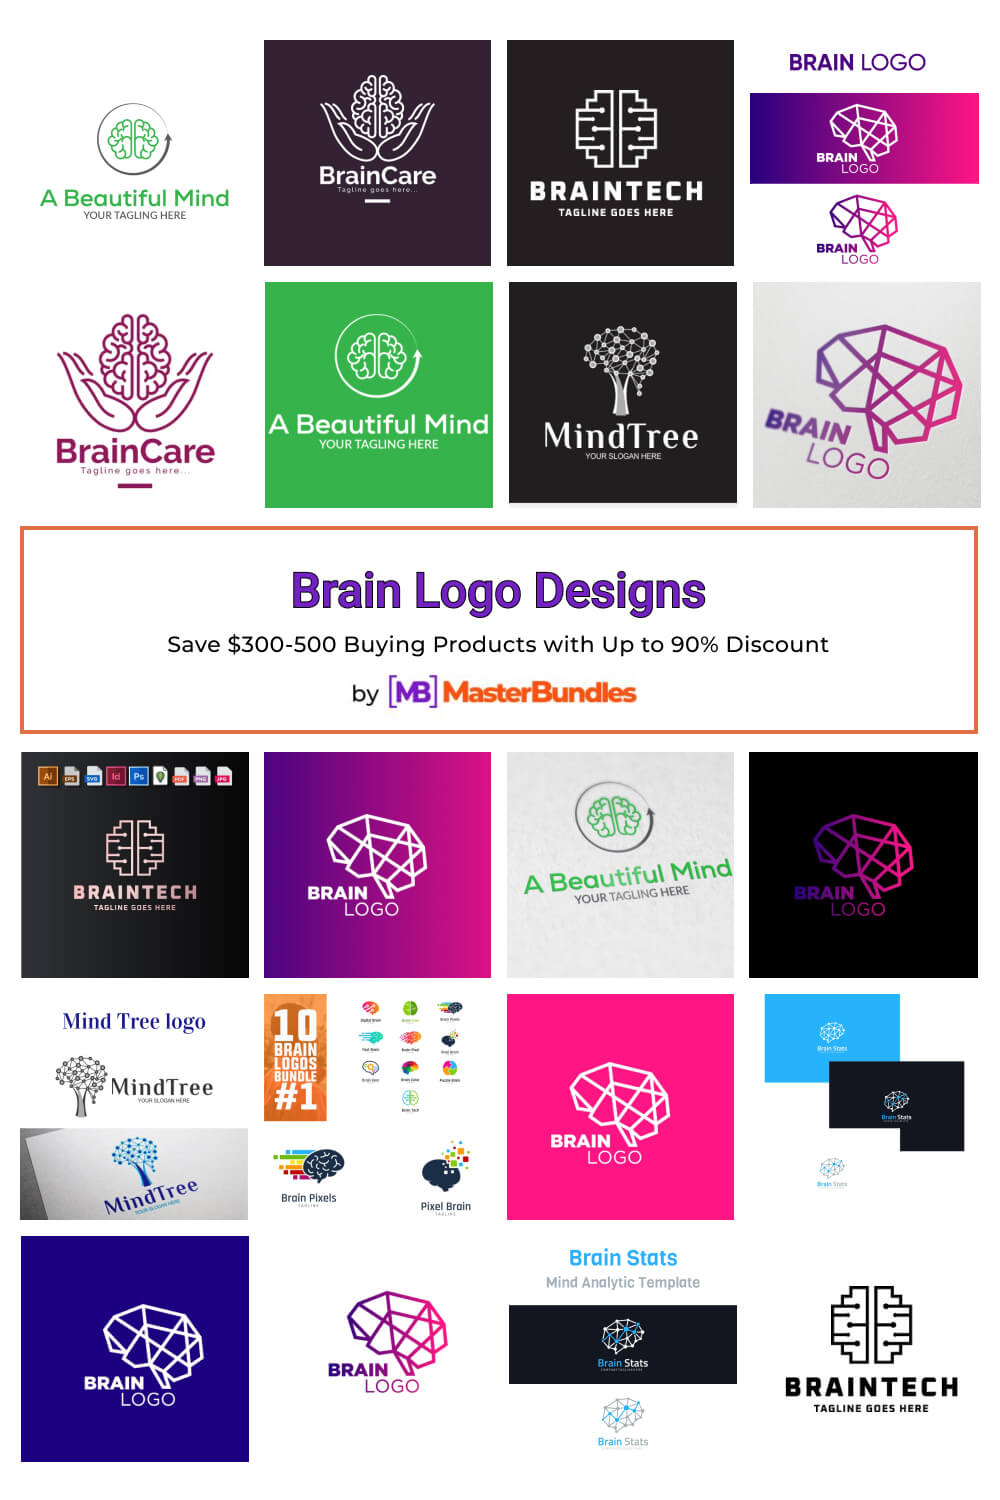 brain logo designs pinterest image.